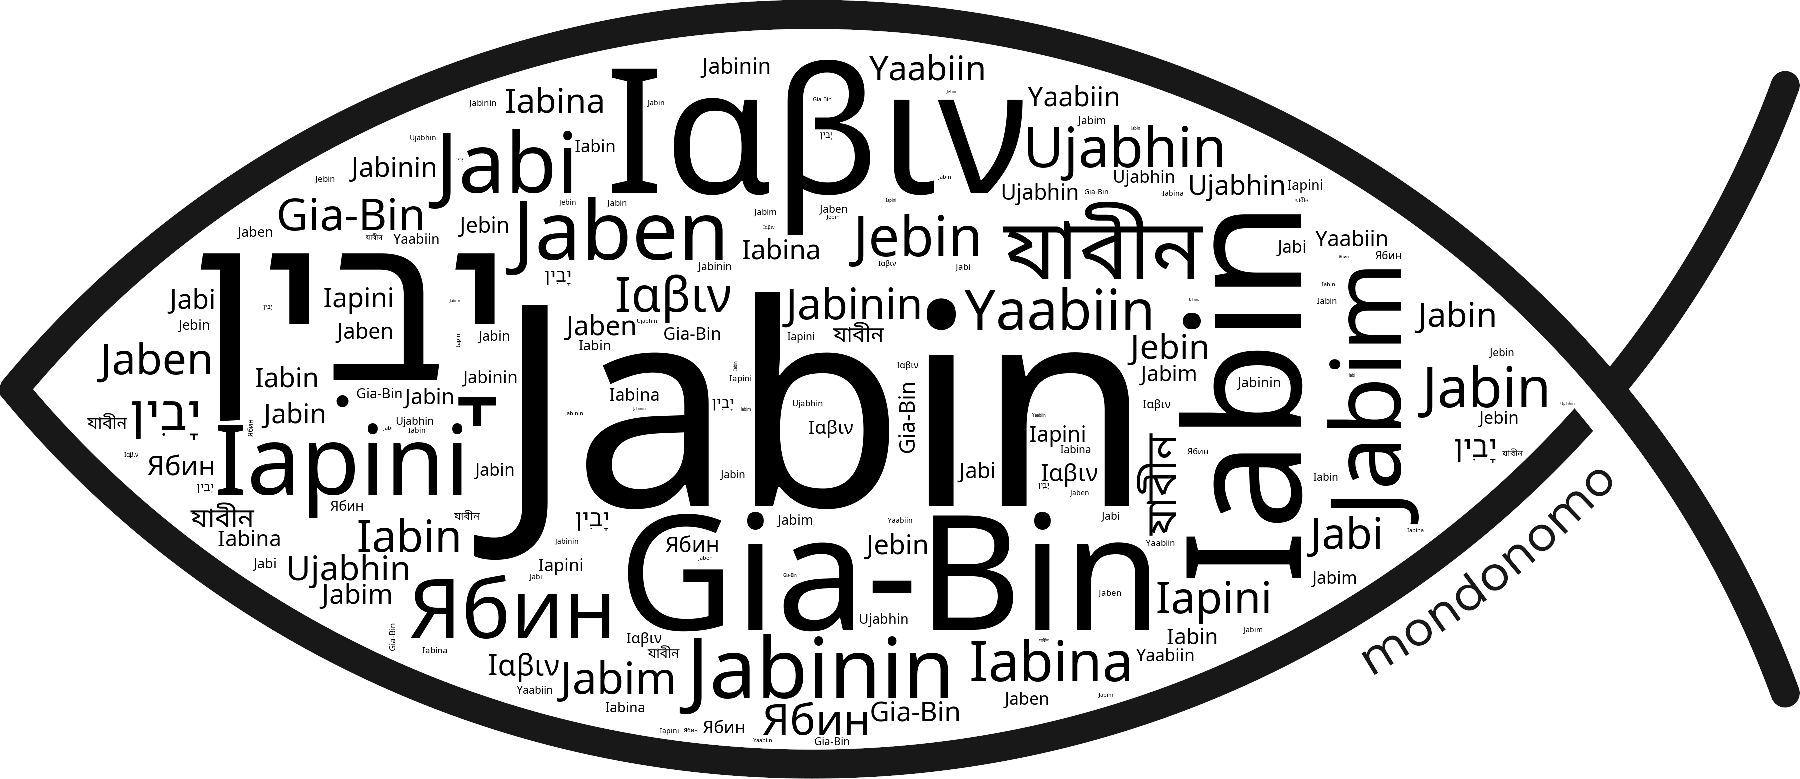 Name Jabin in the world's Bibles